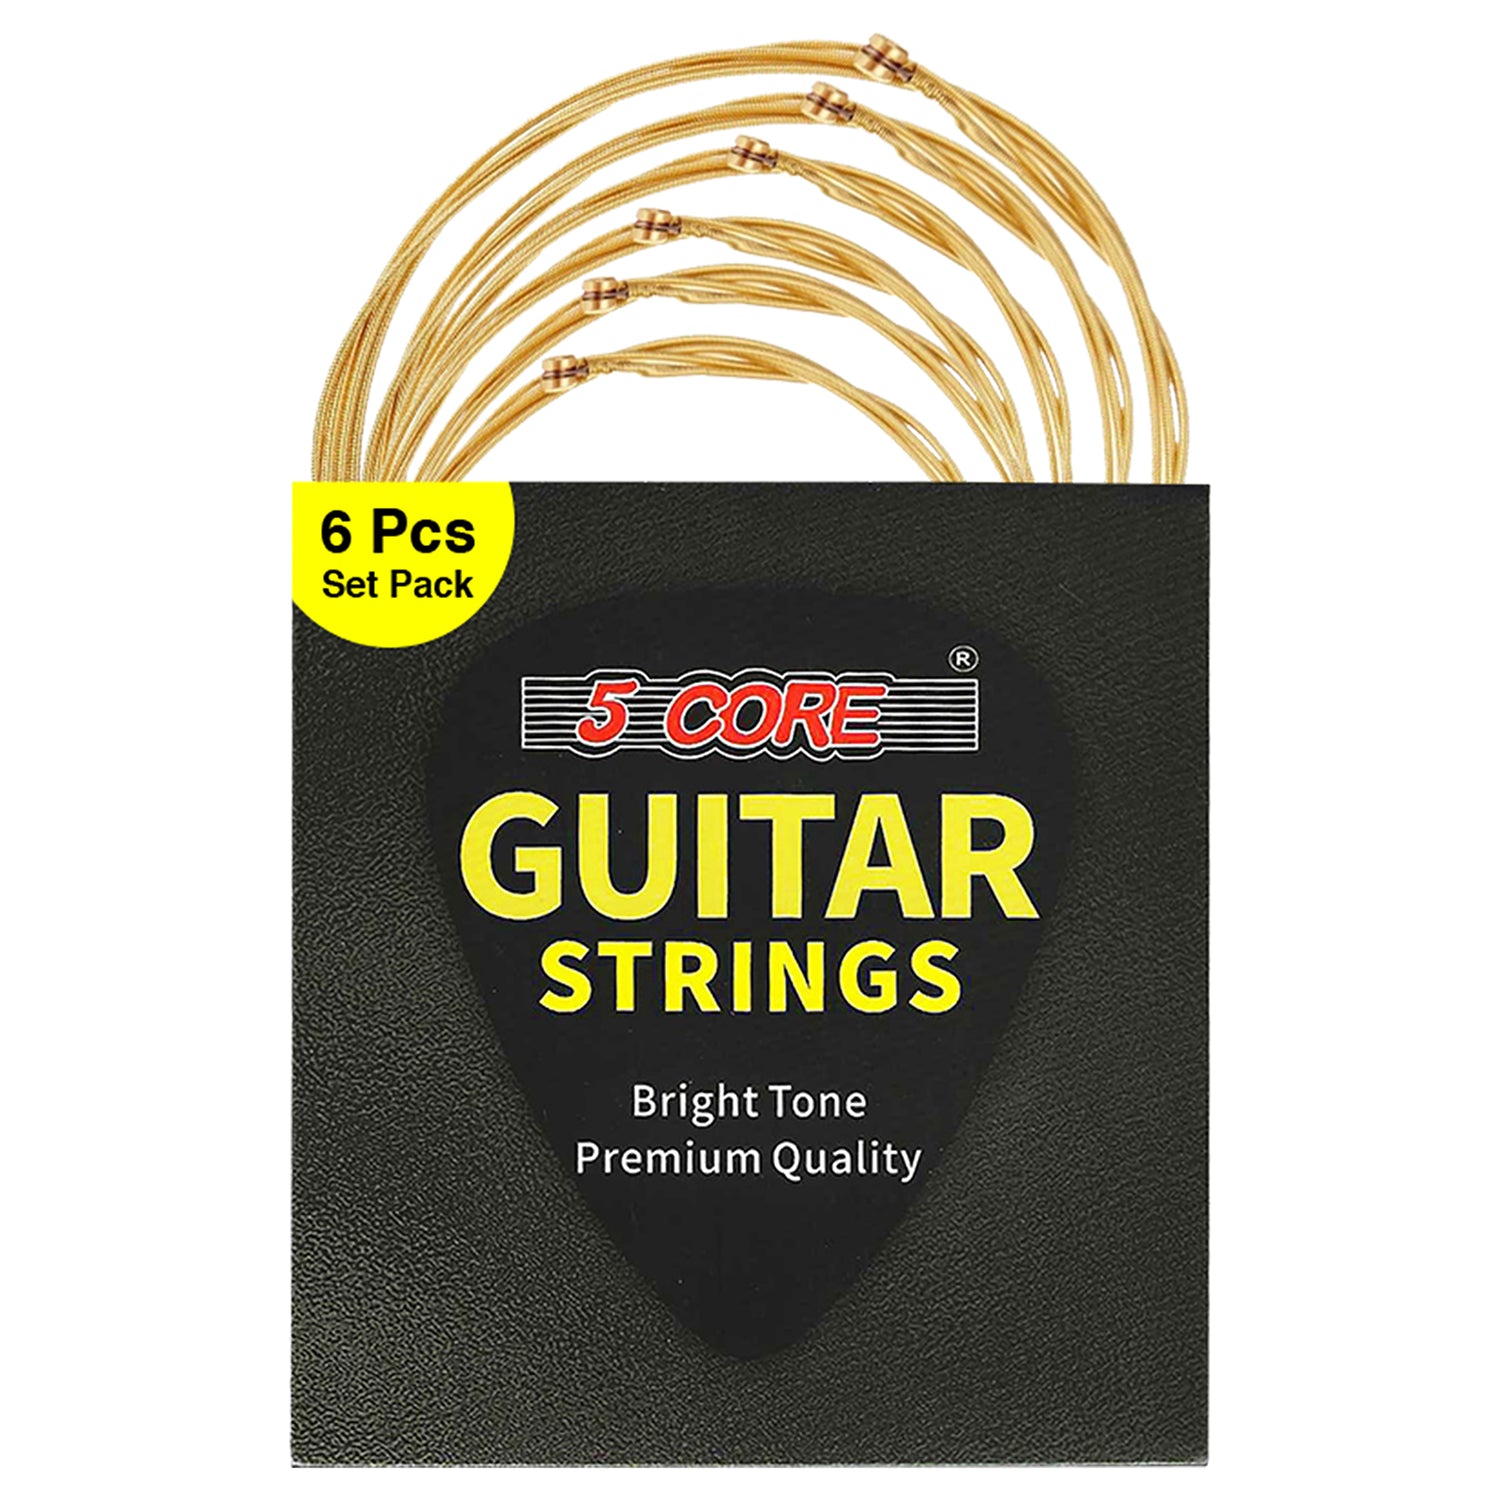 5Core Acoustic Guitar Strings 0.010-0.047 Steel Gauge Heavy Duty w Bright Tone For 6 String Guitars